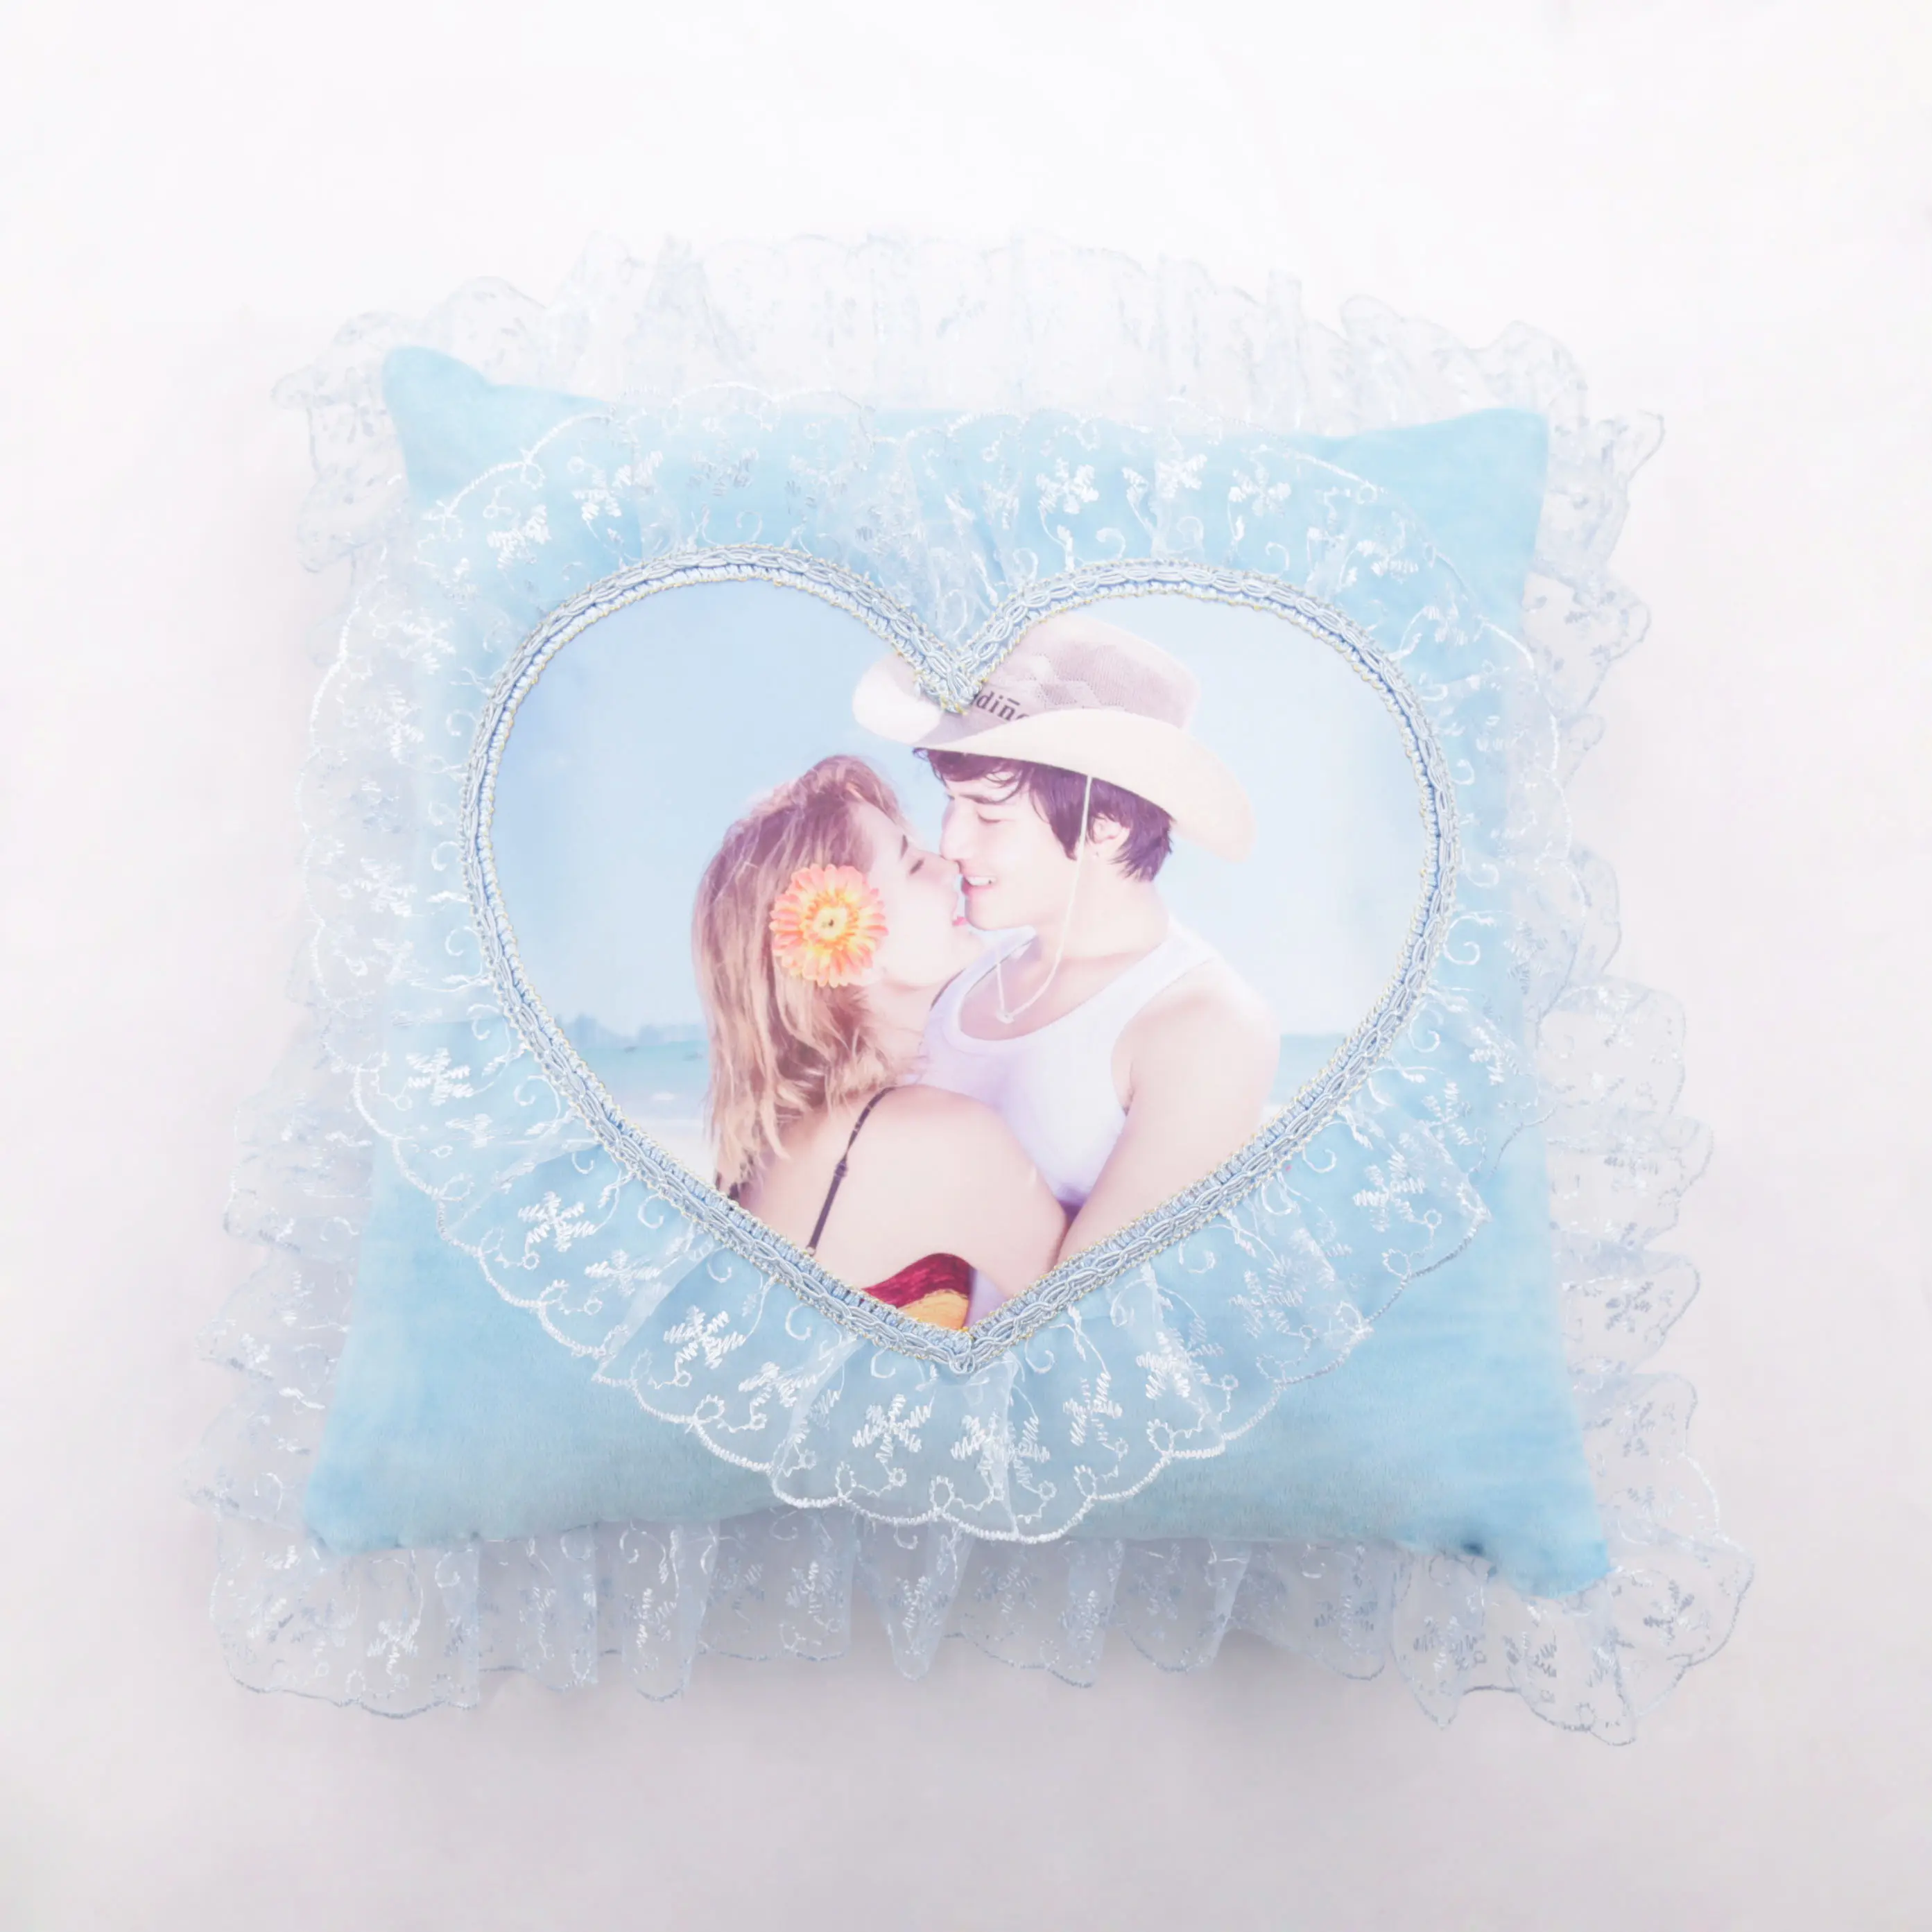 plush custom pillowcases with Digital printing sublimation pillowcases pillow covers decor pillowcases sofa decor